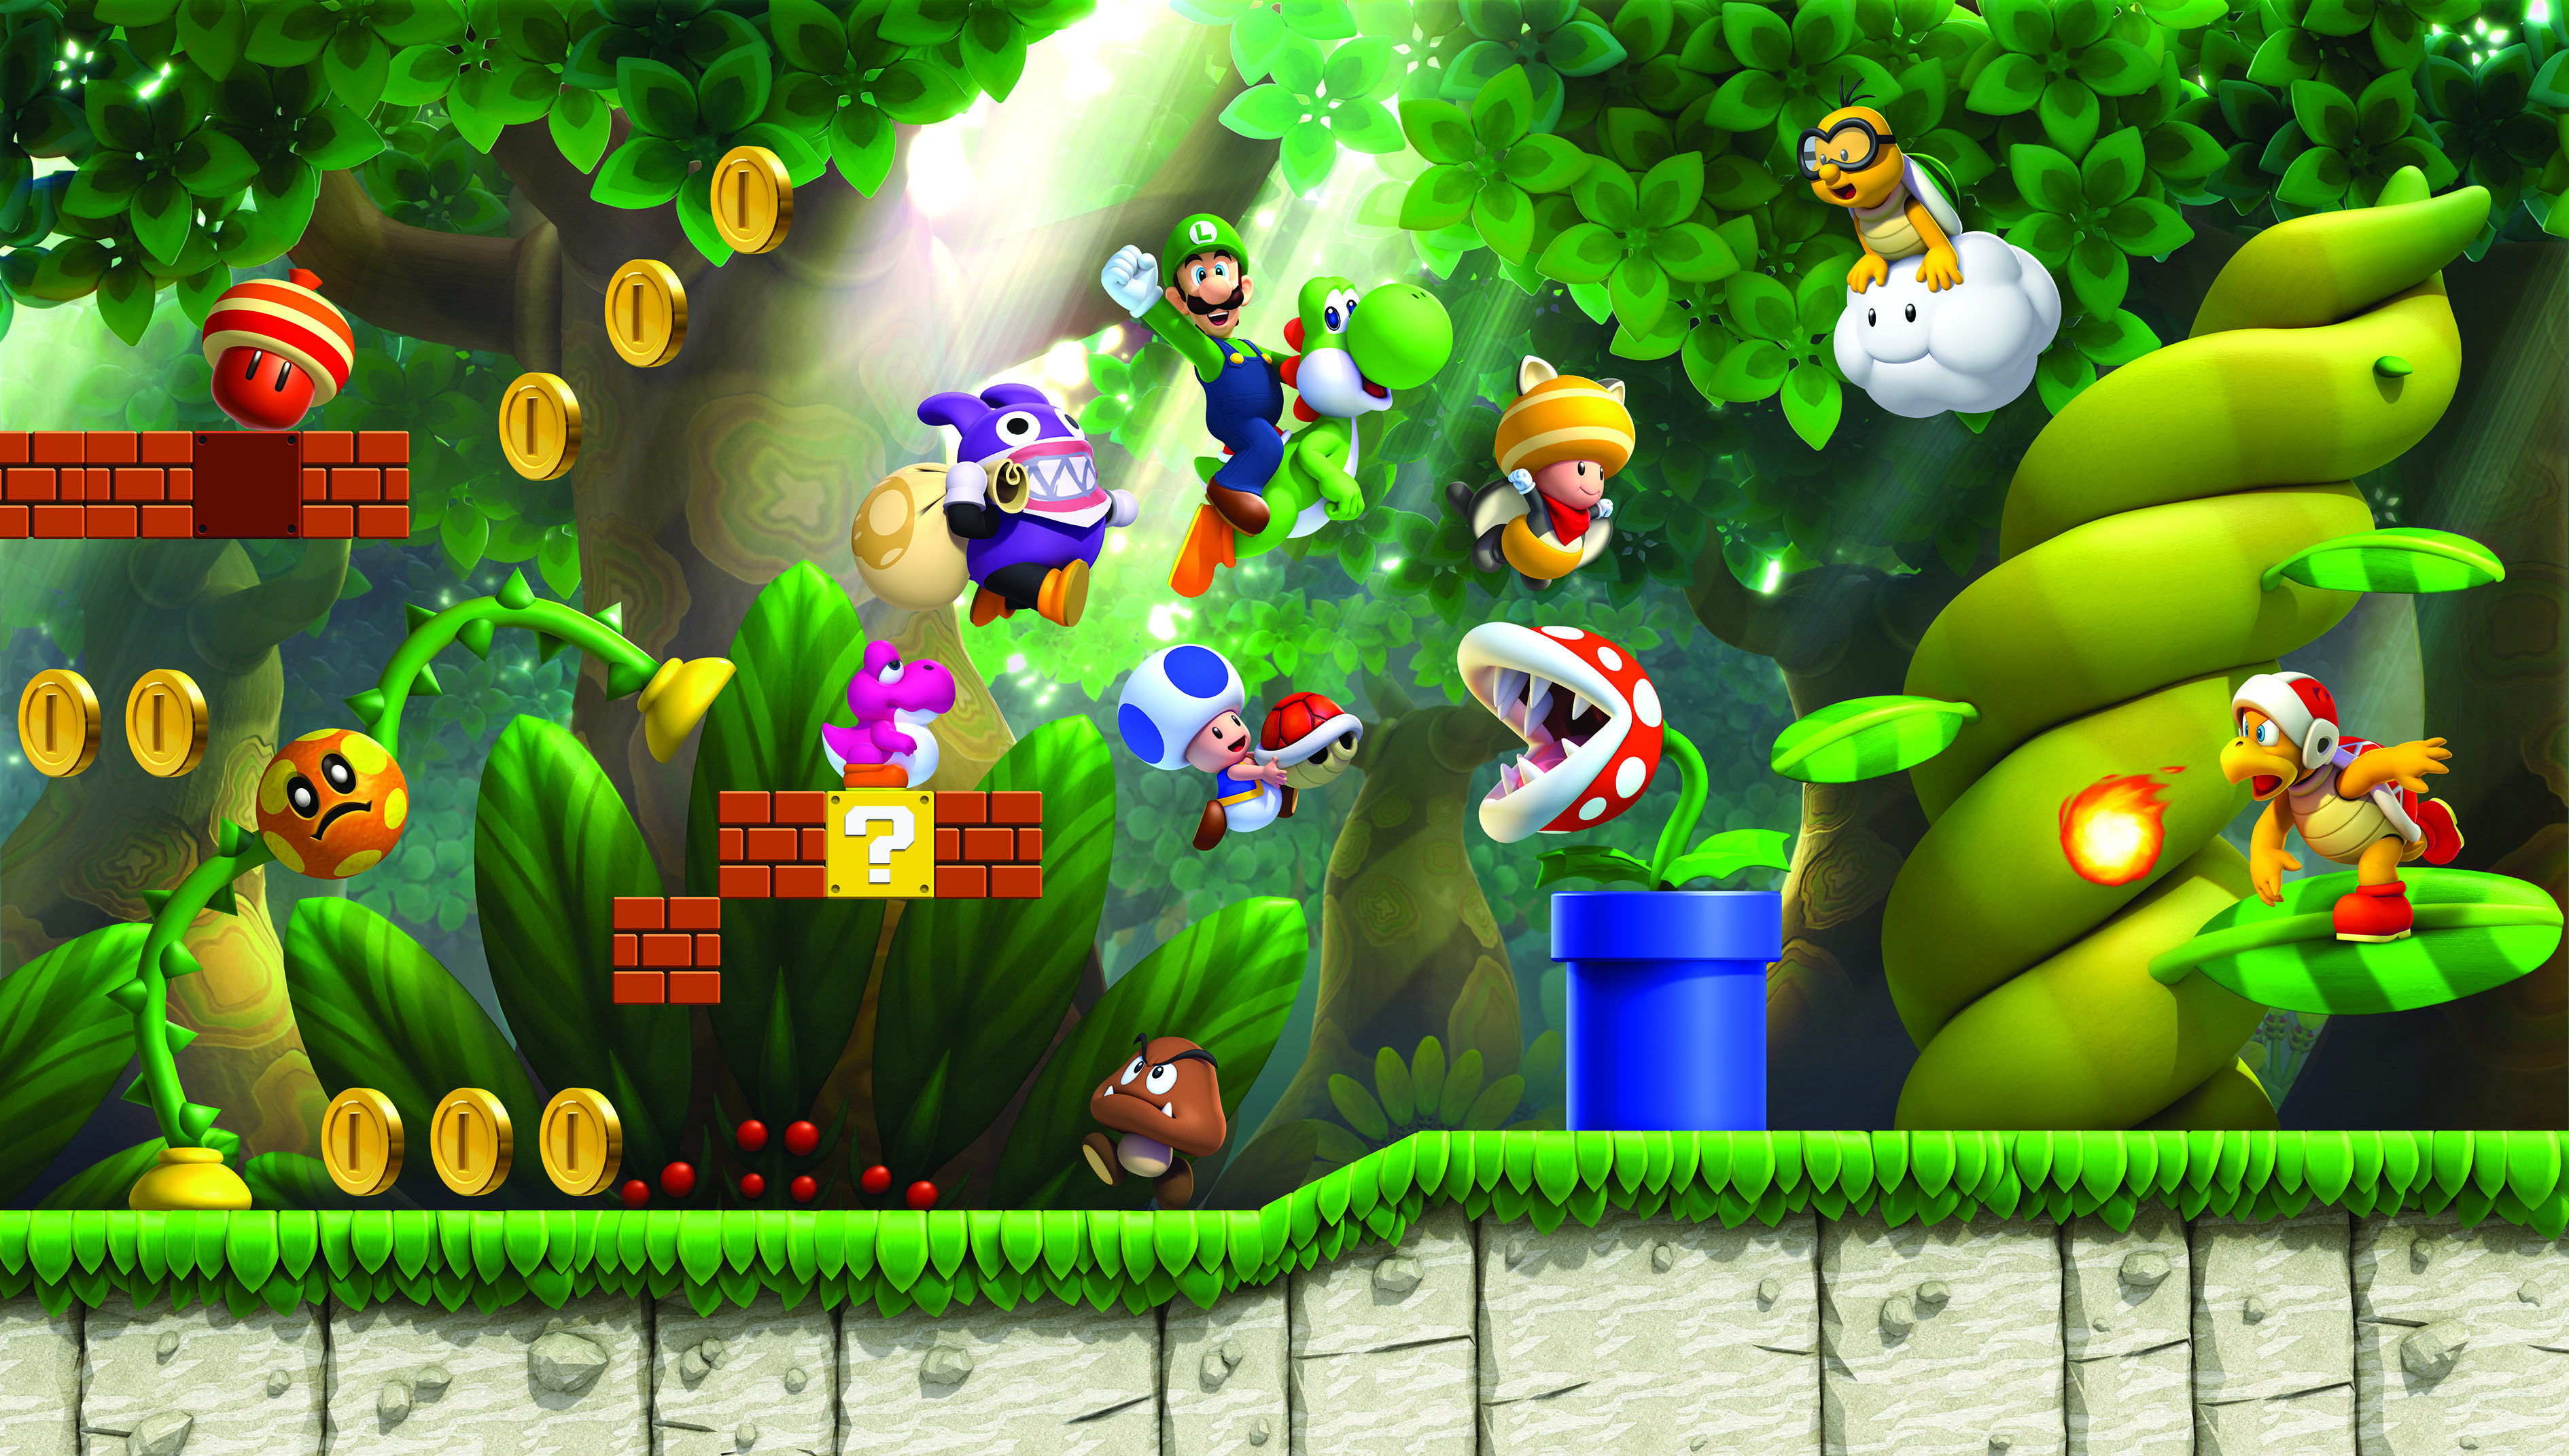 15 New Super Luigi U HD Wallpapers Backgrounds - Wallpaper Abyss